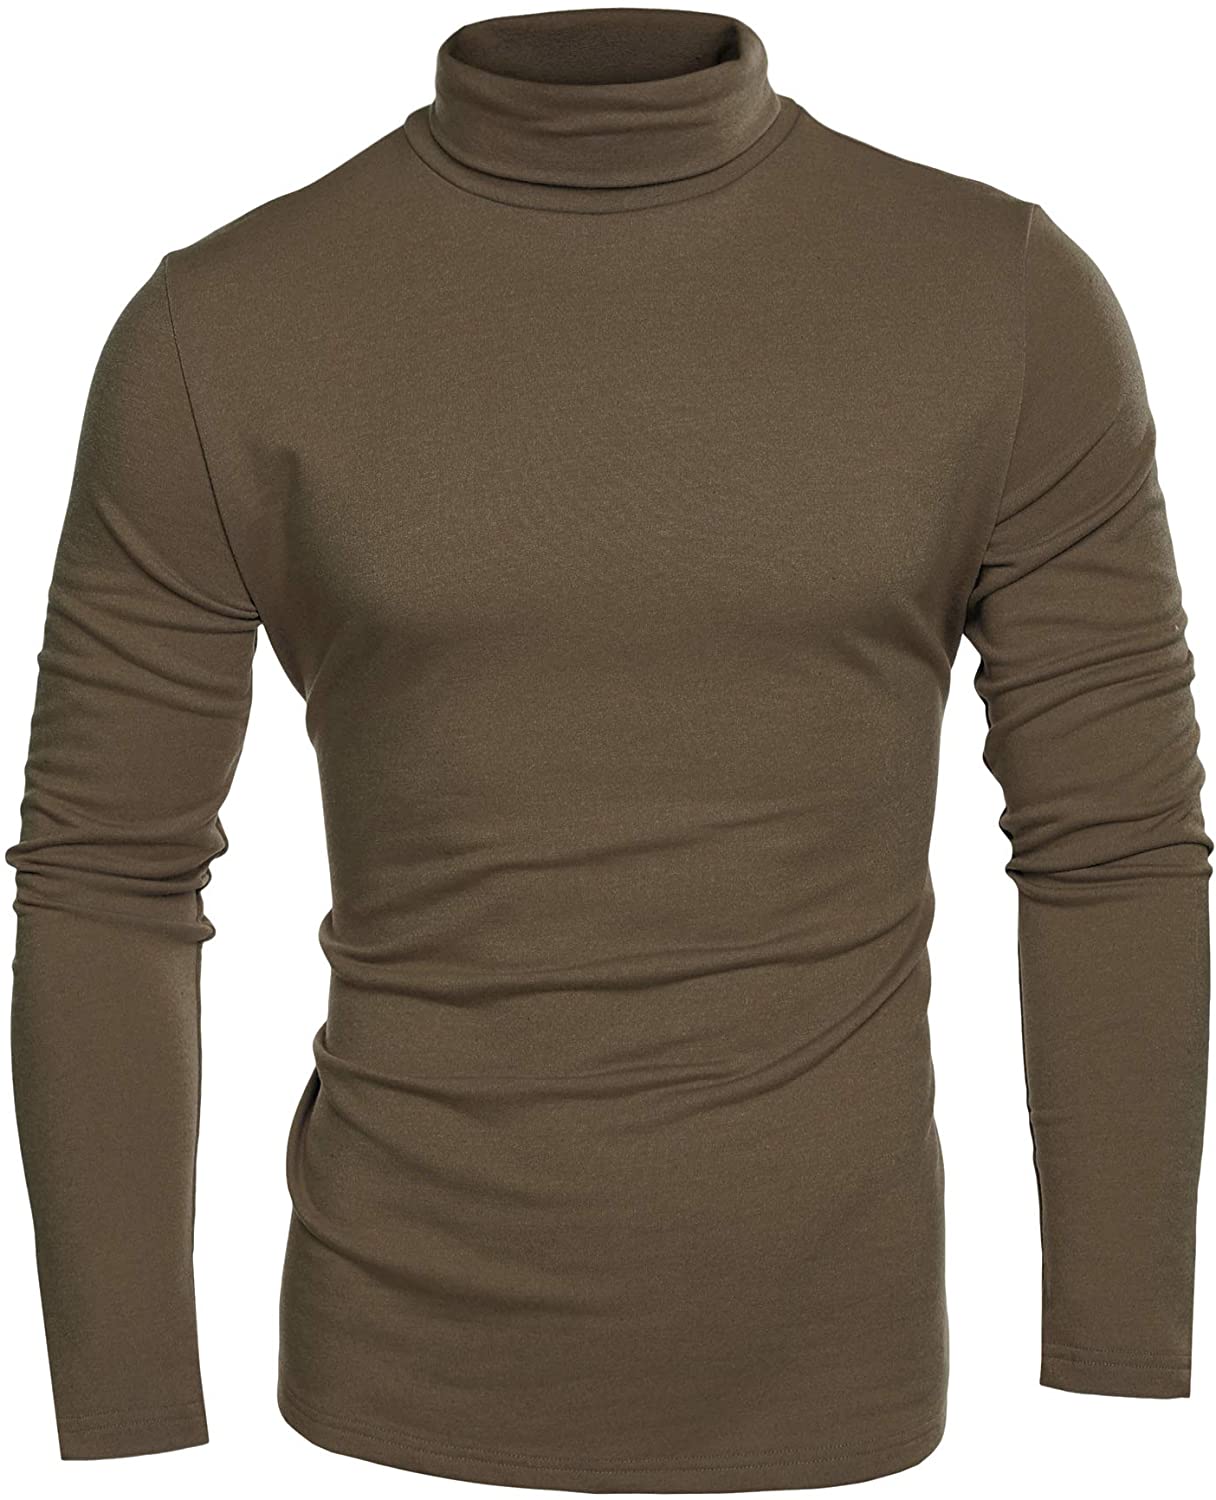 COOFANDY Men's Casual Slim Fit Turtleneck T Shirts Lightweight Basic ...